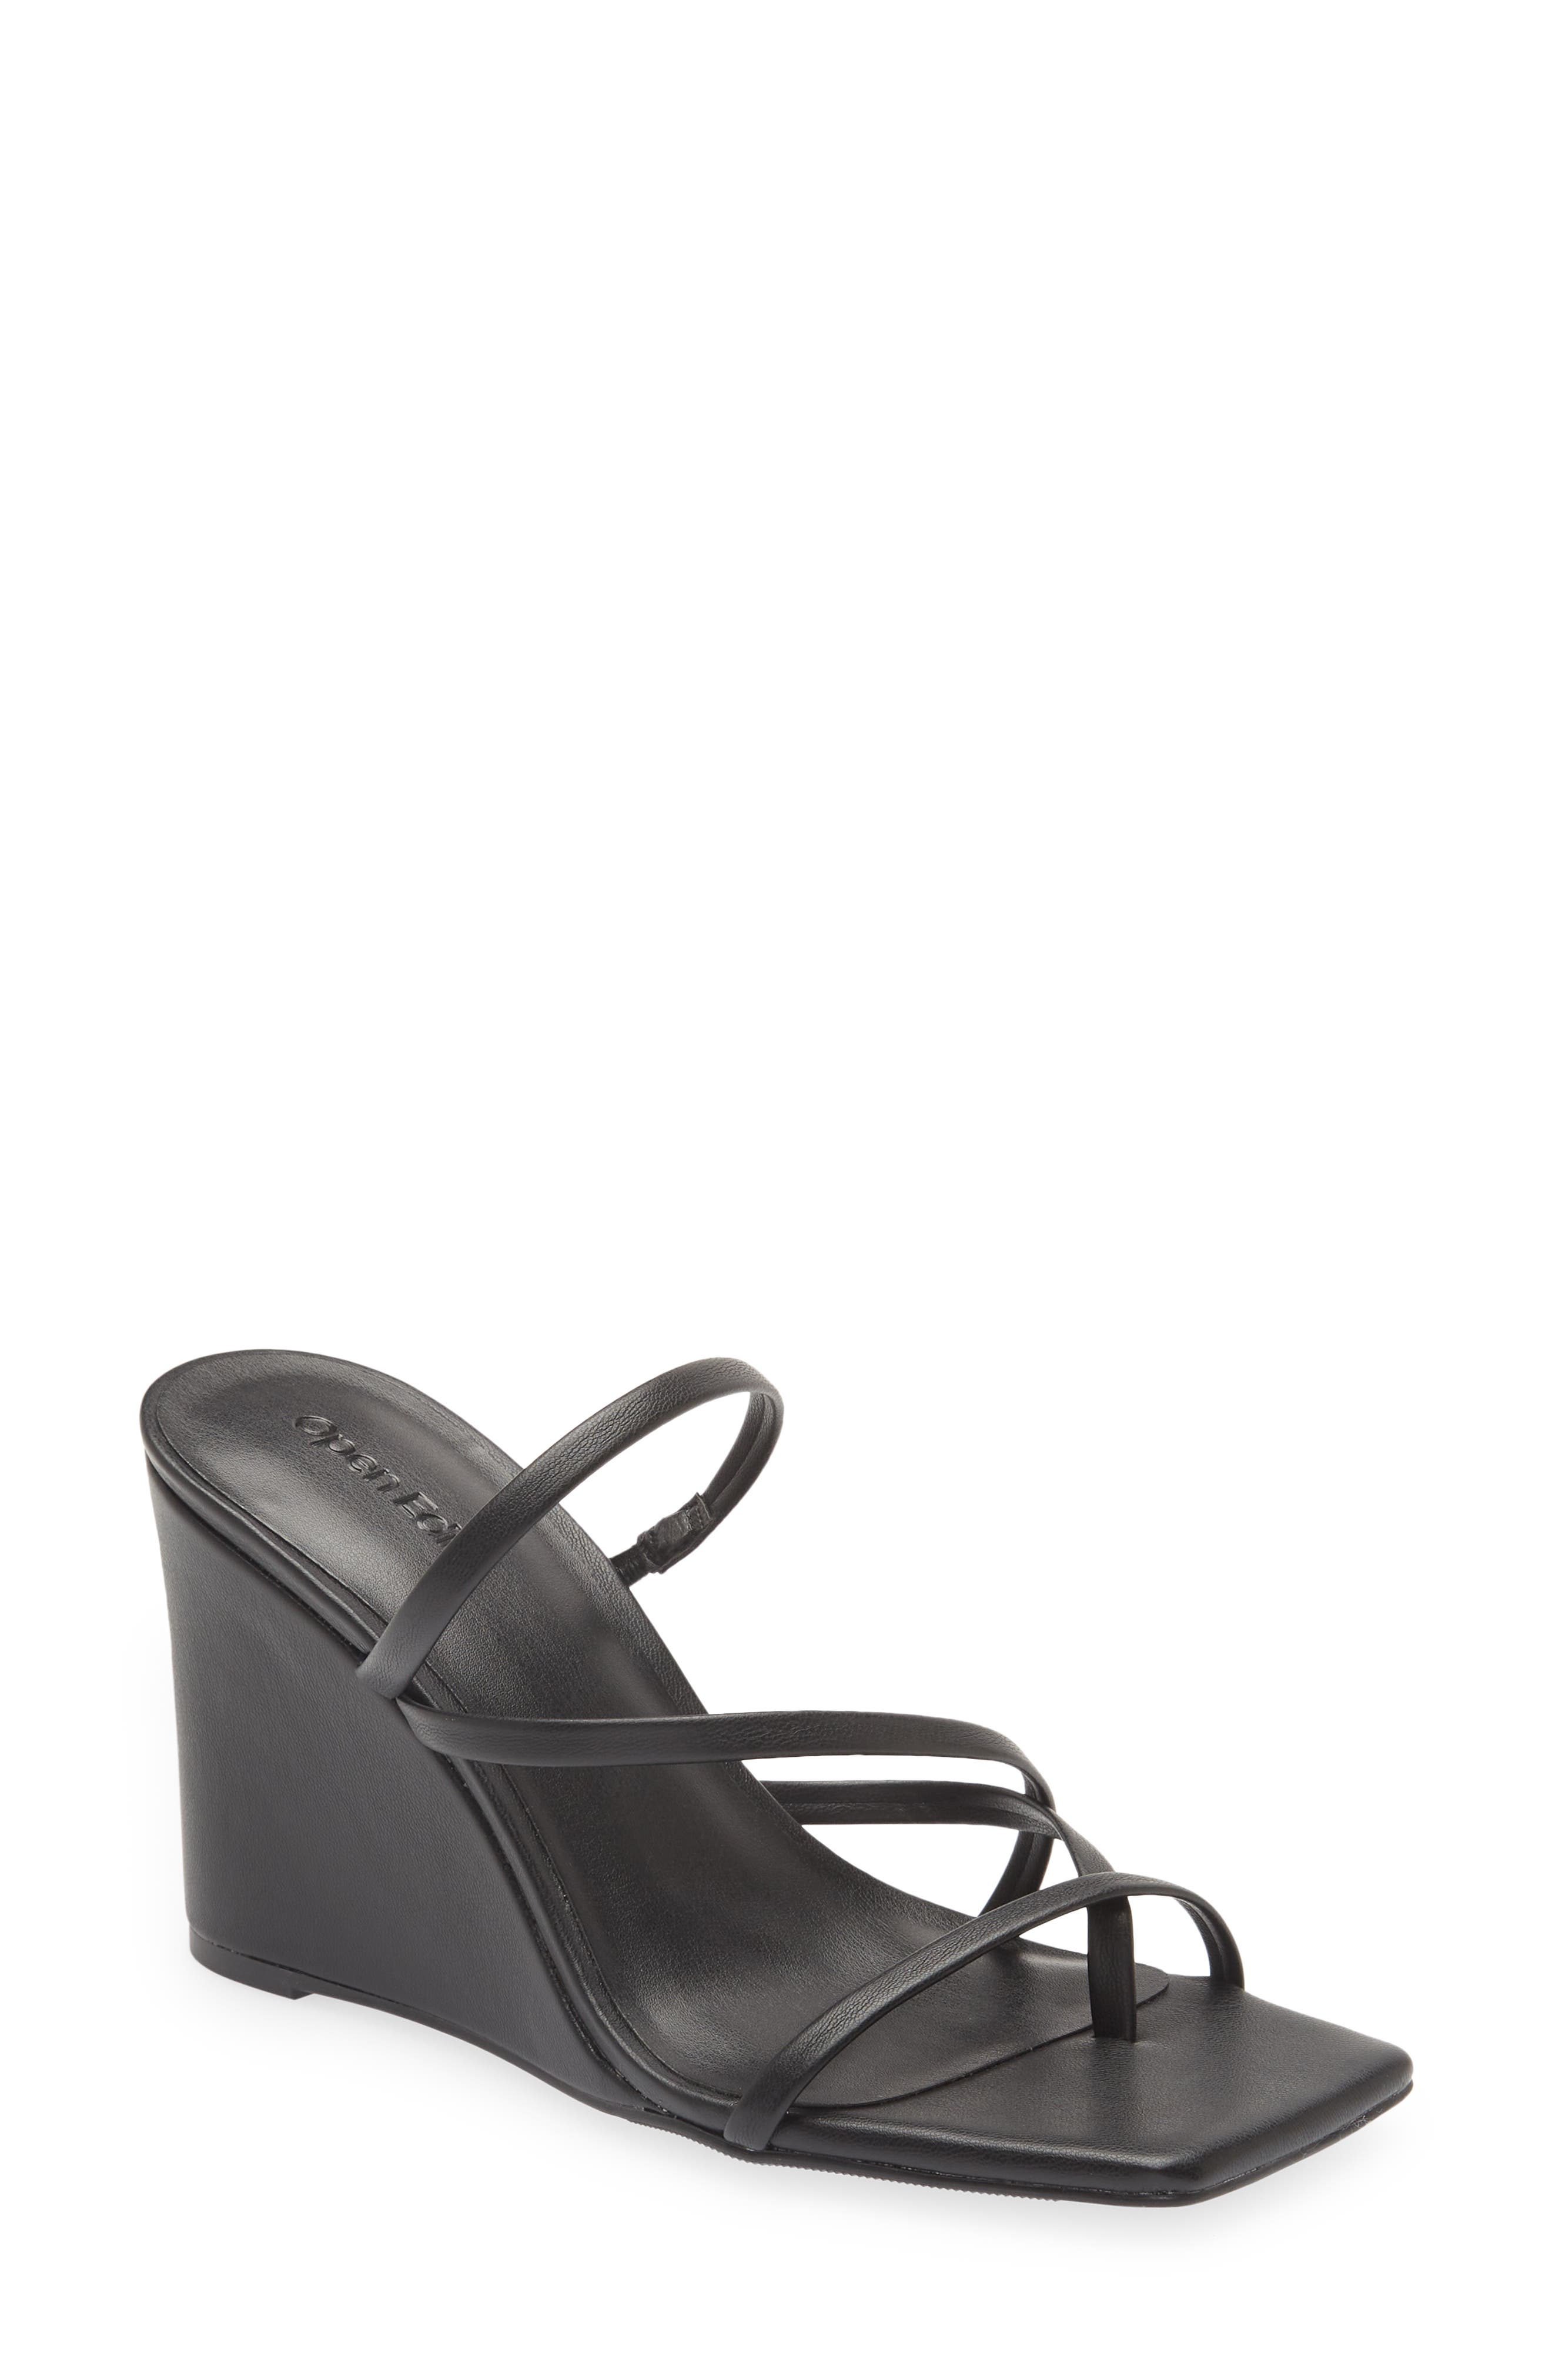 Block Heel Asymmetric Strap Sandal in Black Leather at Nordstrom Nordstrom Women Shoes High Heels Wedges Wedge Sandals 